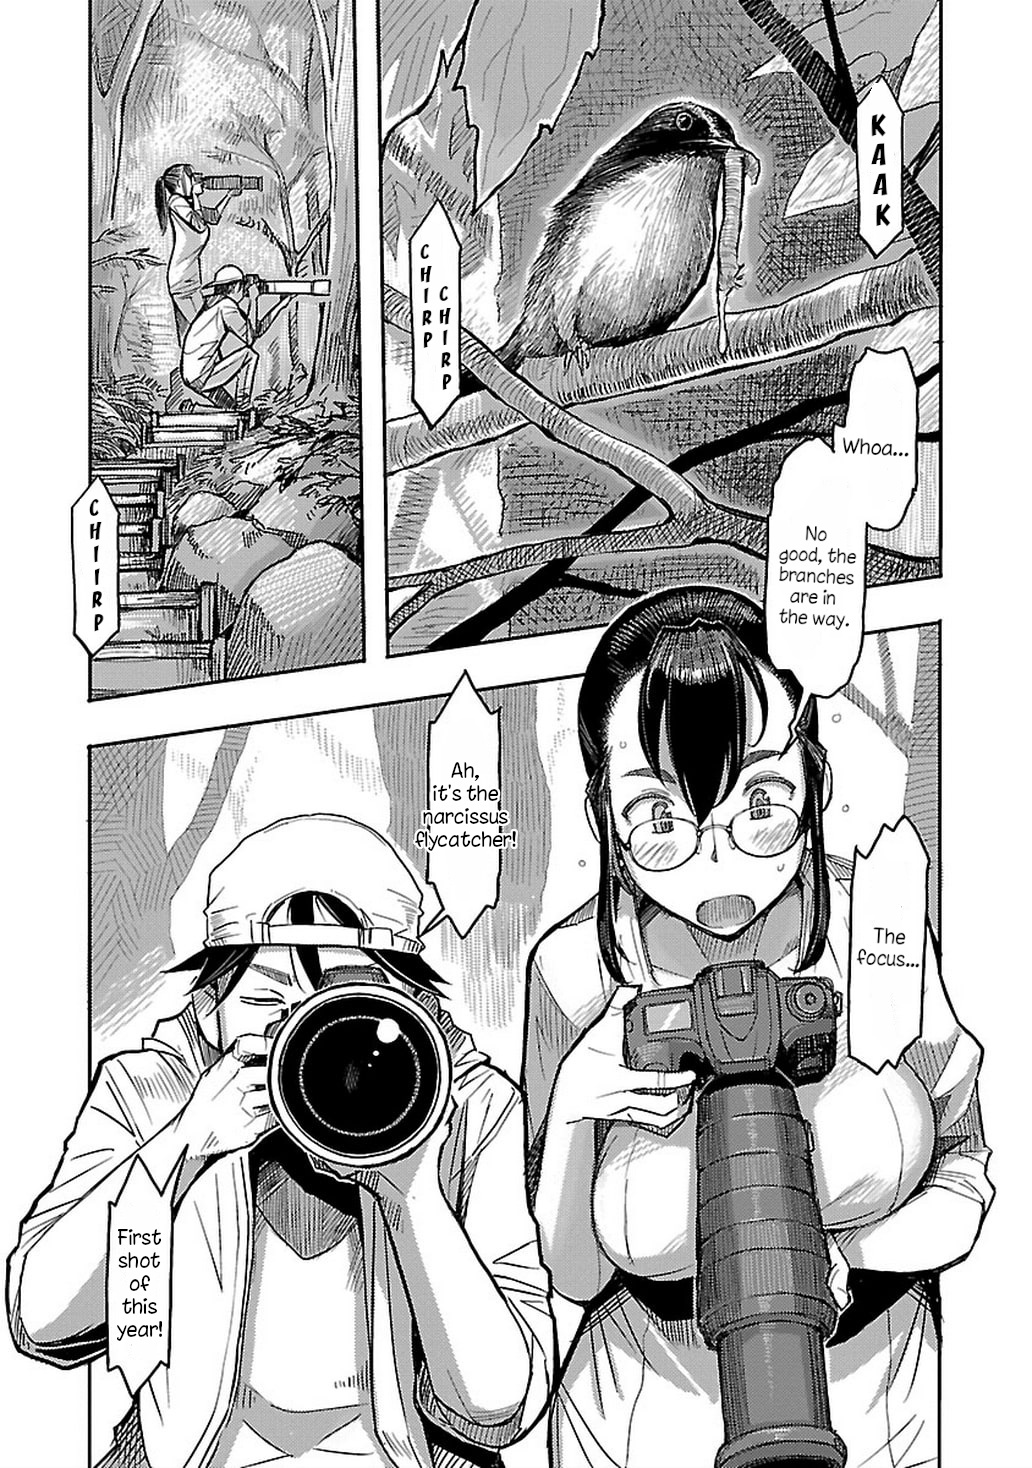 Akiyama-San No Tori Life - Page 3